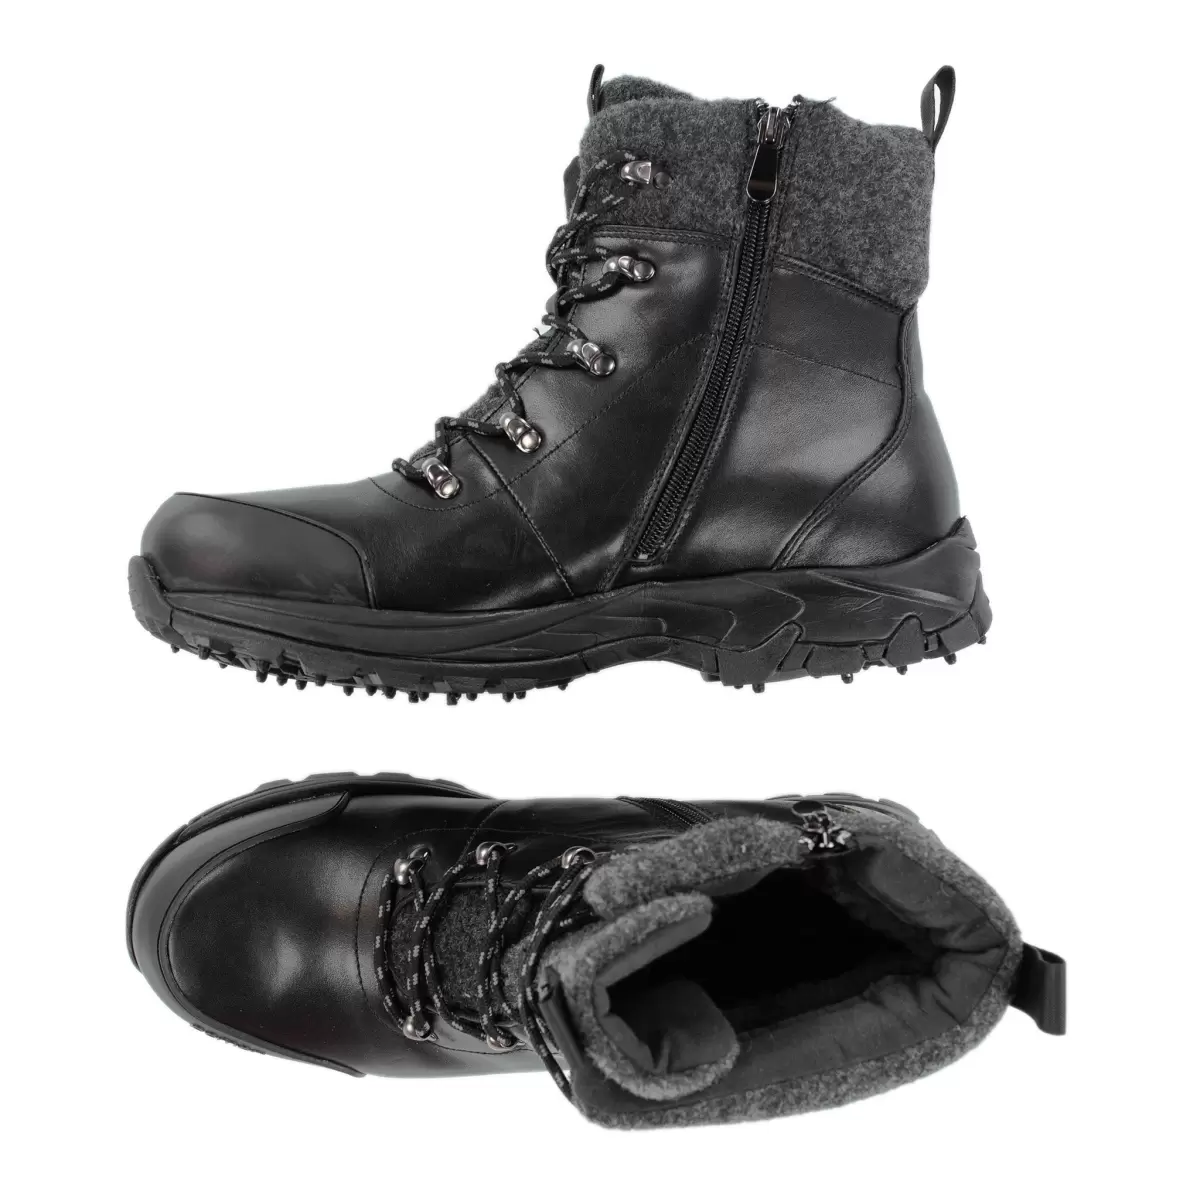 Winter Boots Pomarfin Oy Black Nappa/Gr Felt/Synt.fur Lining Otso Men's Spike Winter Boots Men - 4